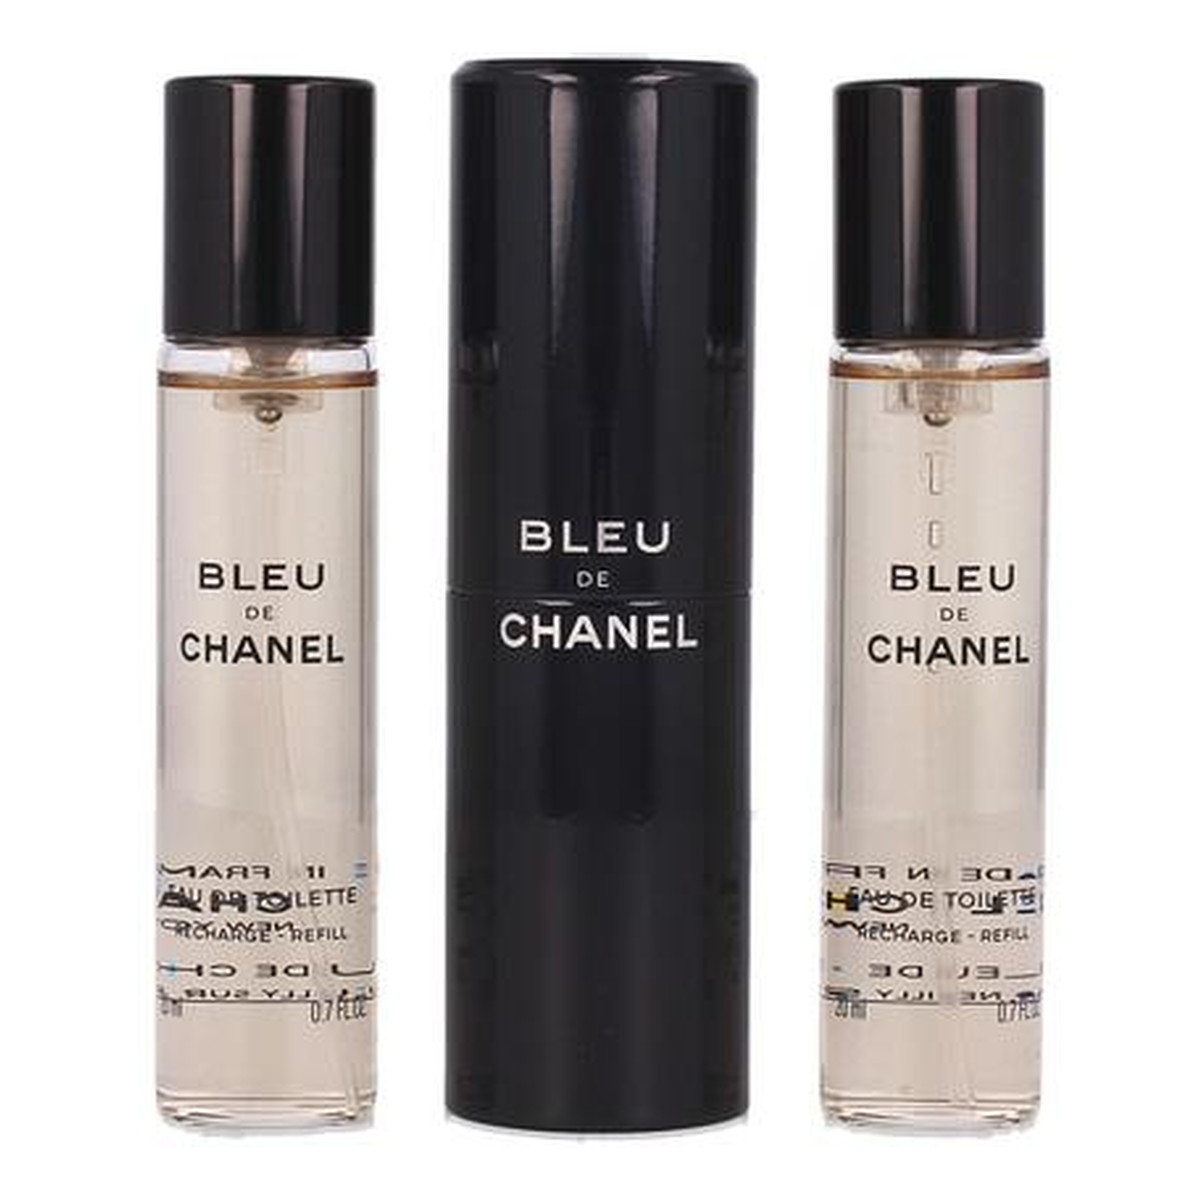 Chanel Bleu De Chanel Woda Toaletowa Travel spray and two refills 3x20ml. 20ml